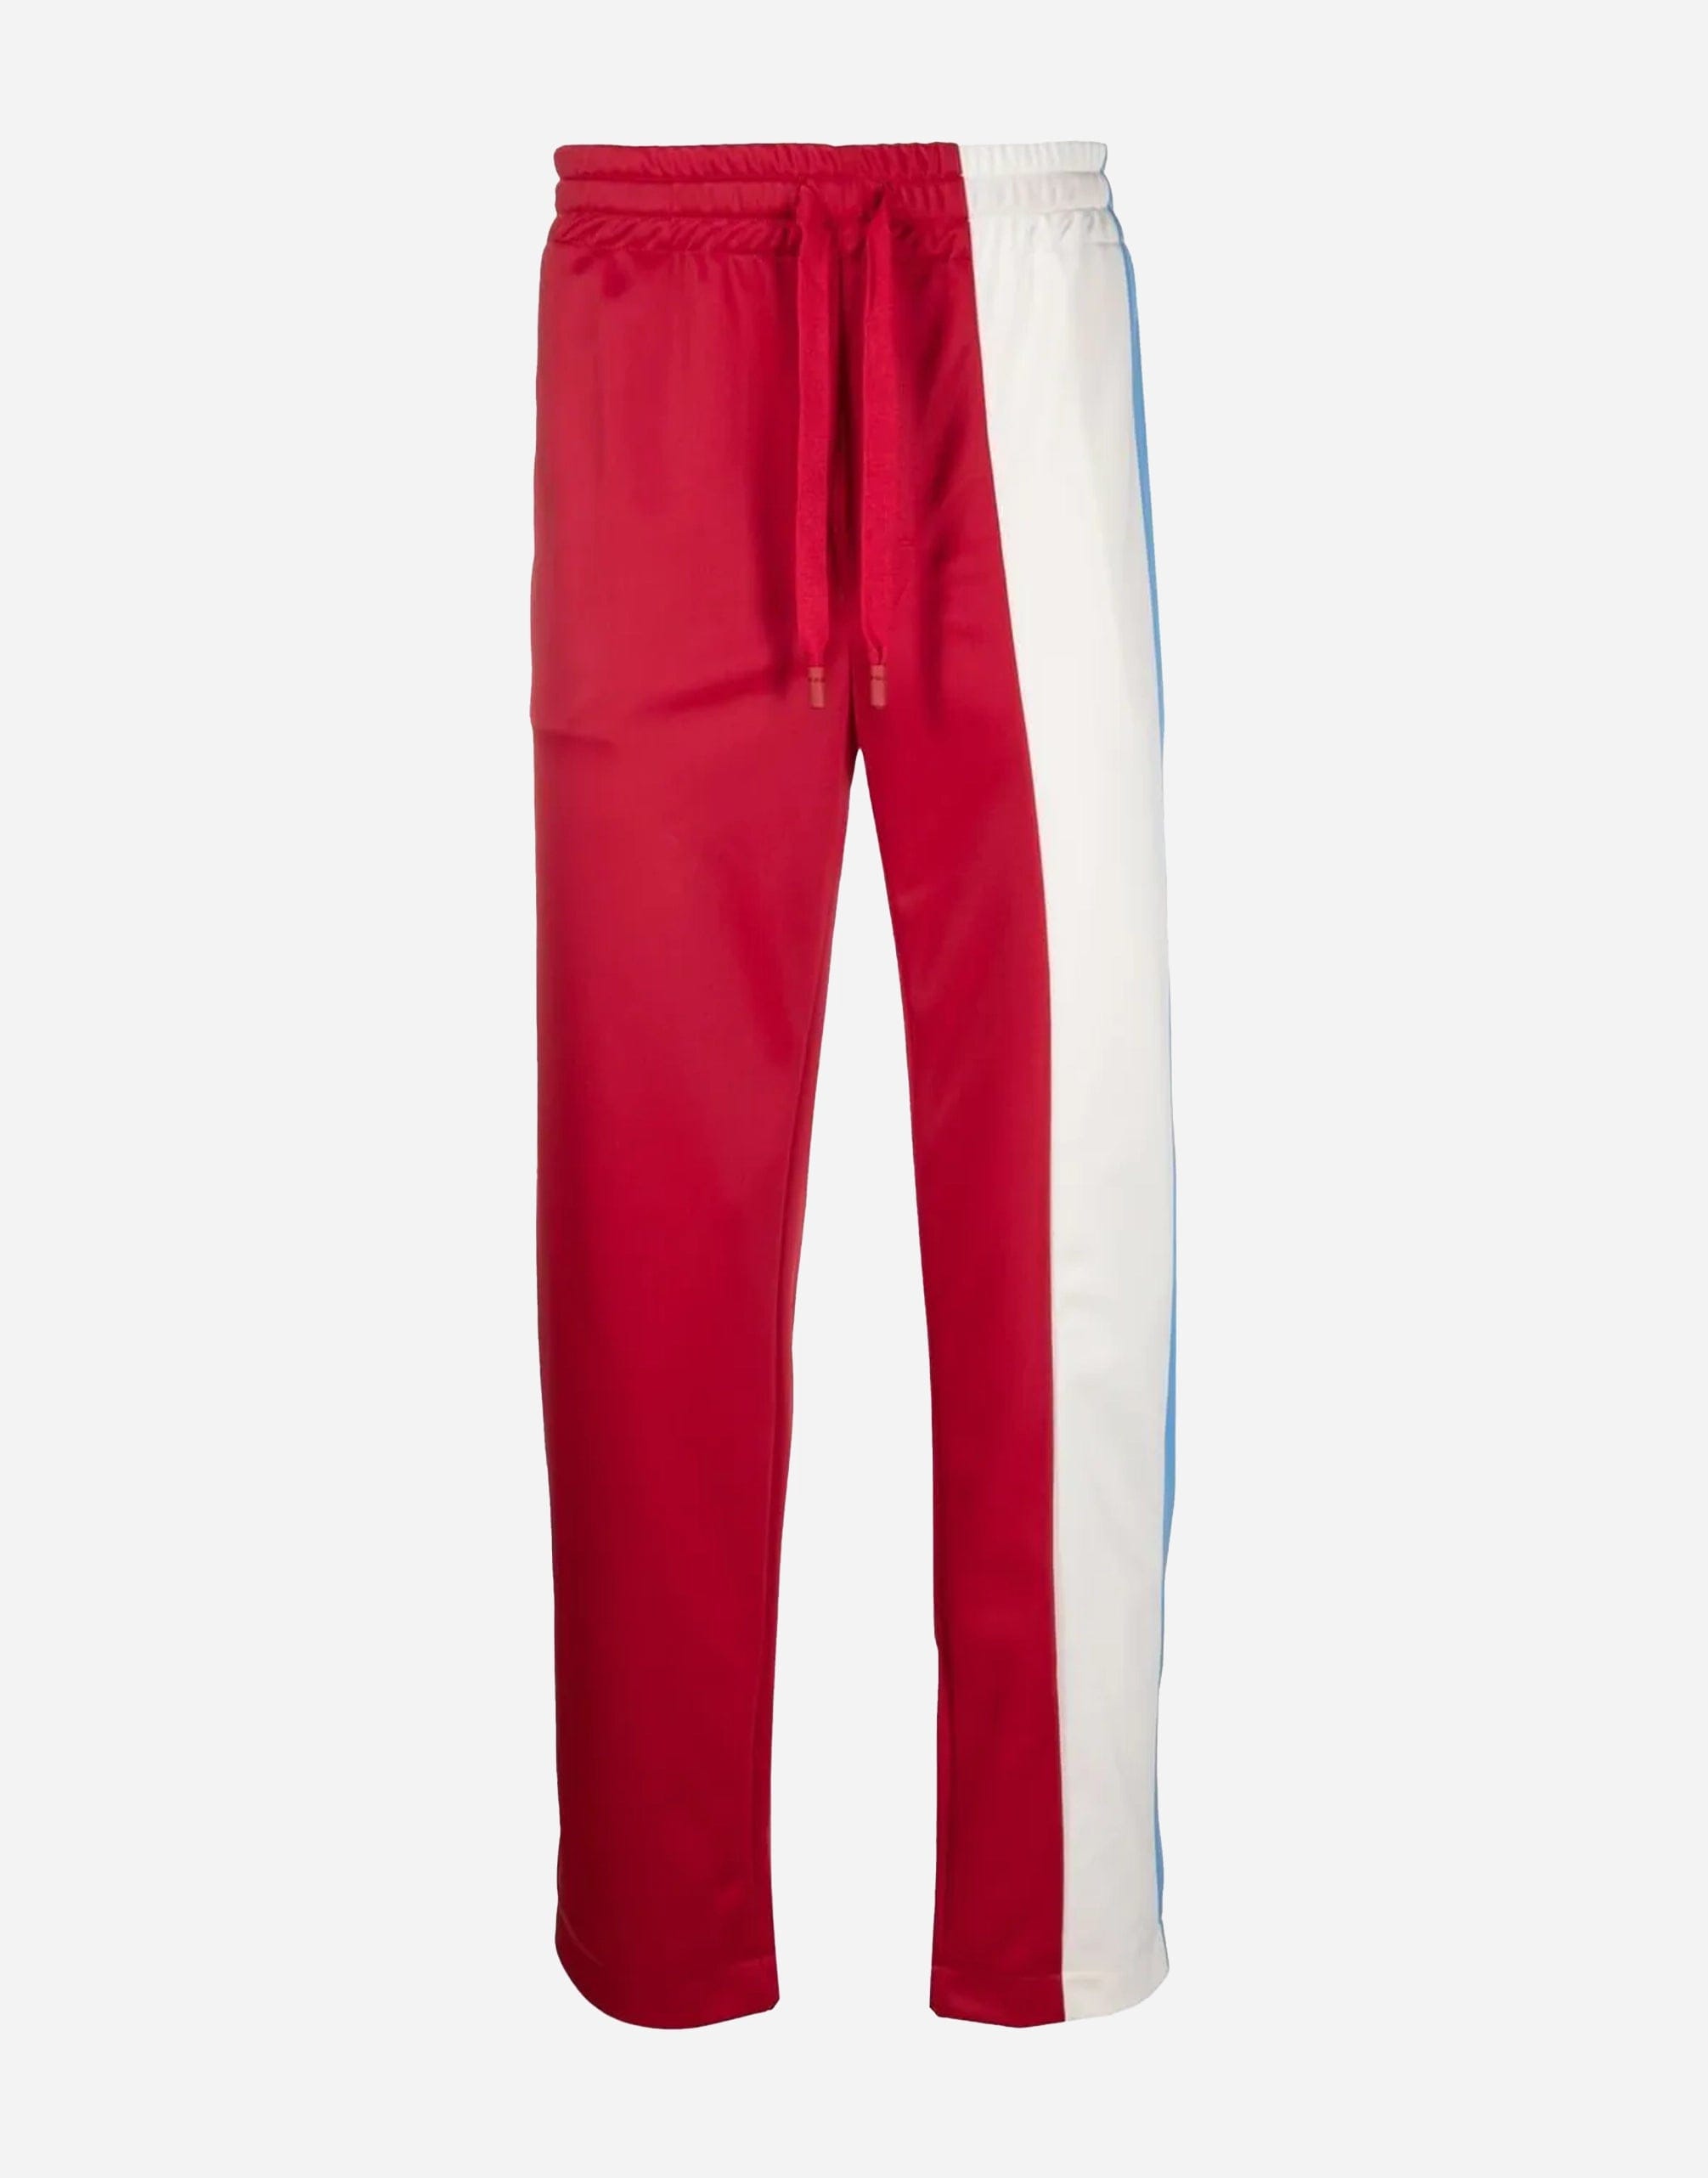 Dolce & Gabbana Color-Block Jogging Pants